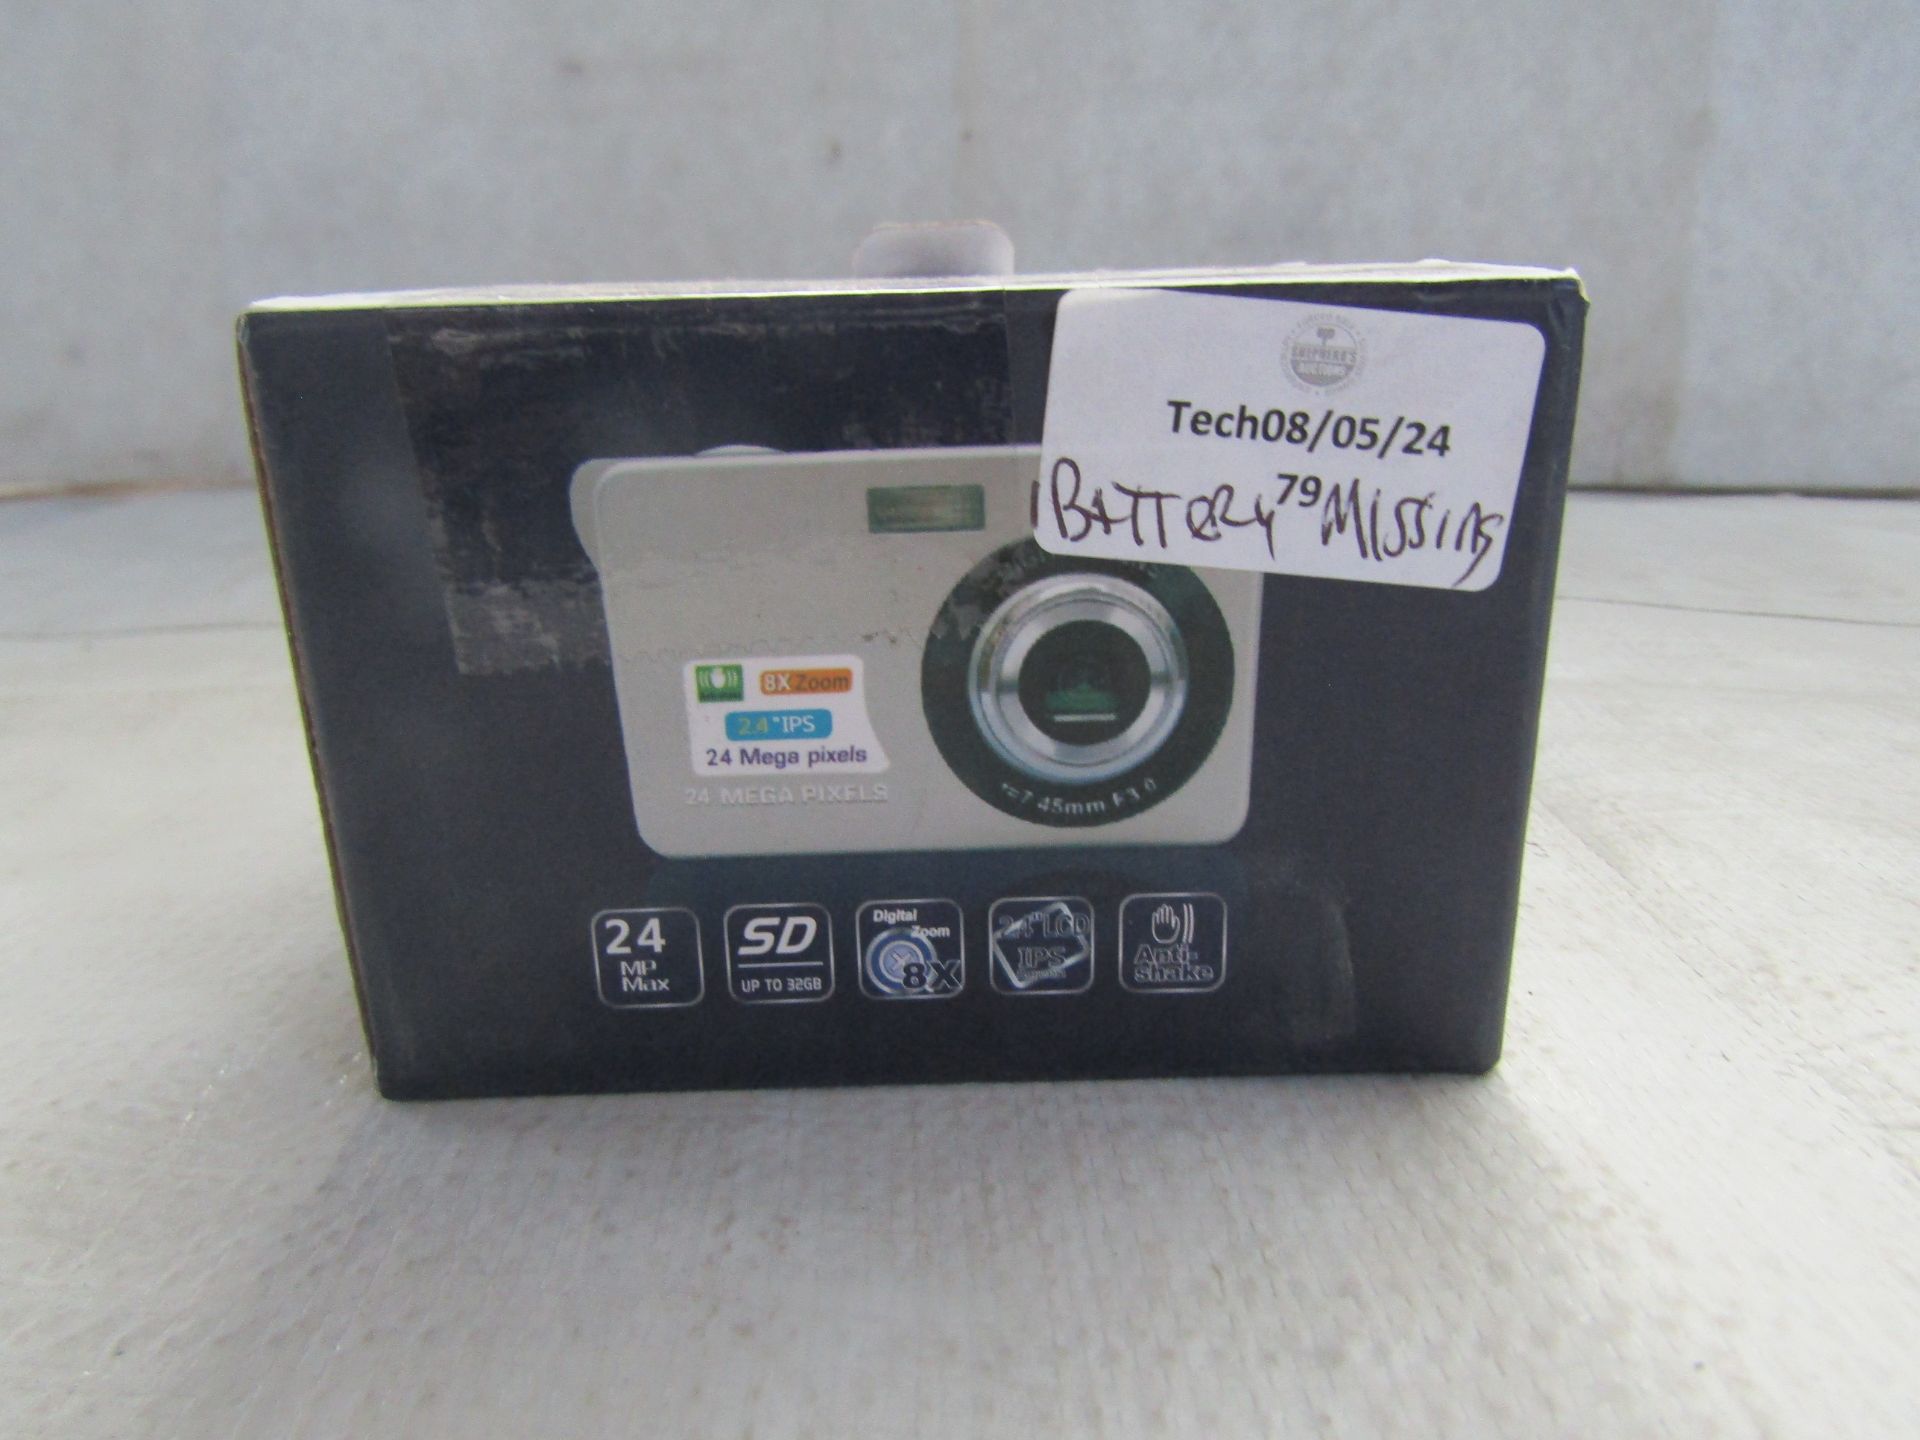 Camking High Definition Digital Camera, 24mp Max, Sd Slot - Battery Missing & Boxed.